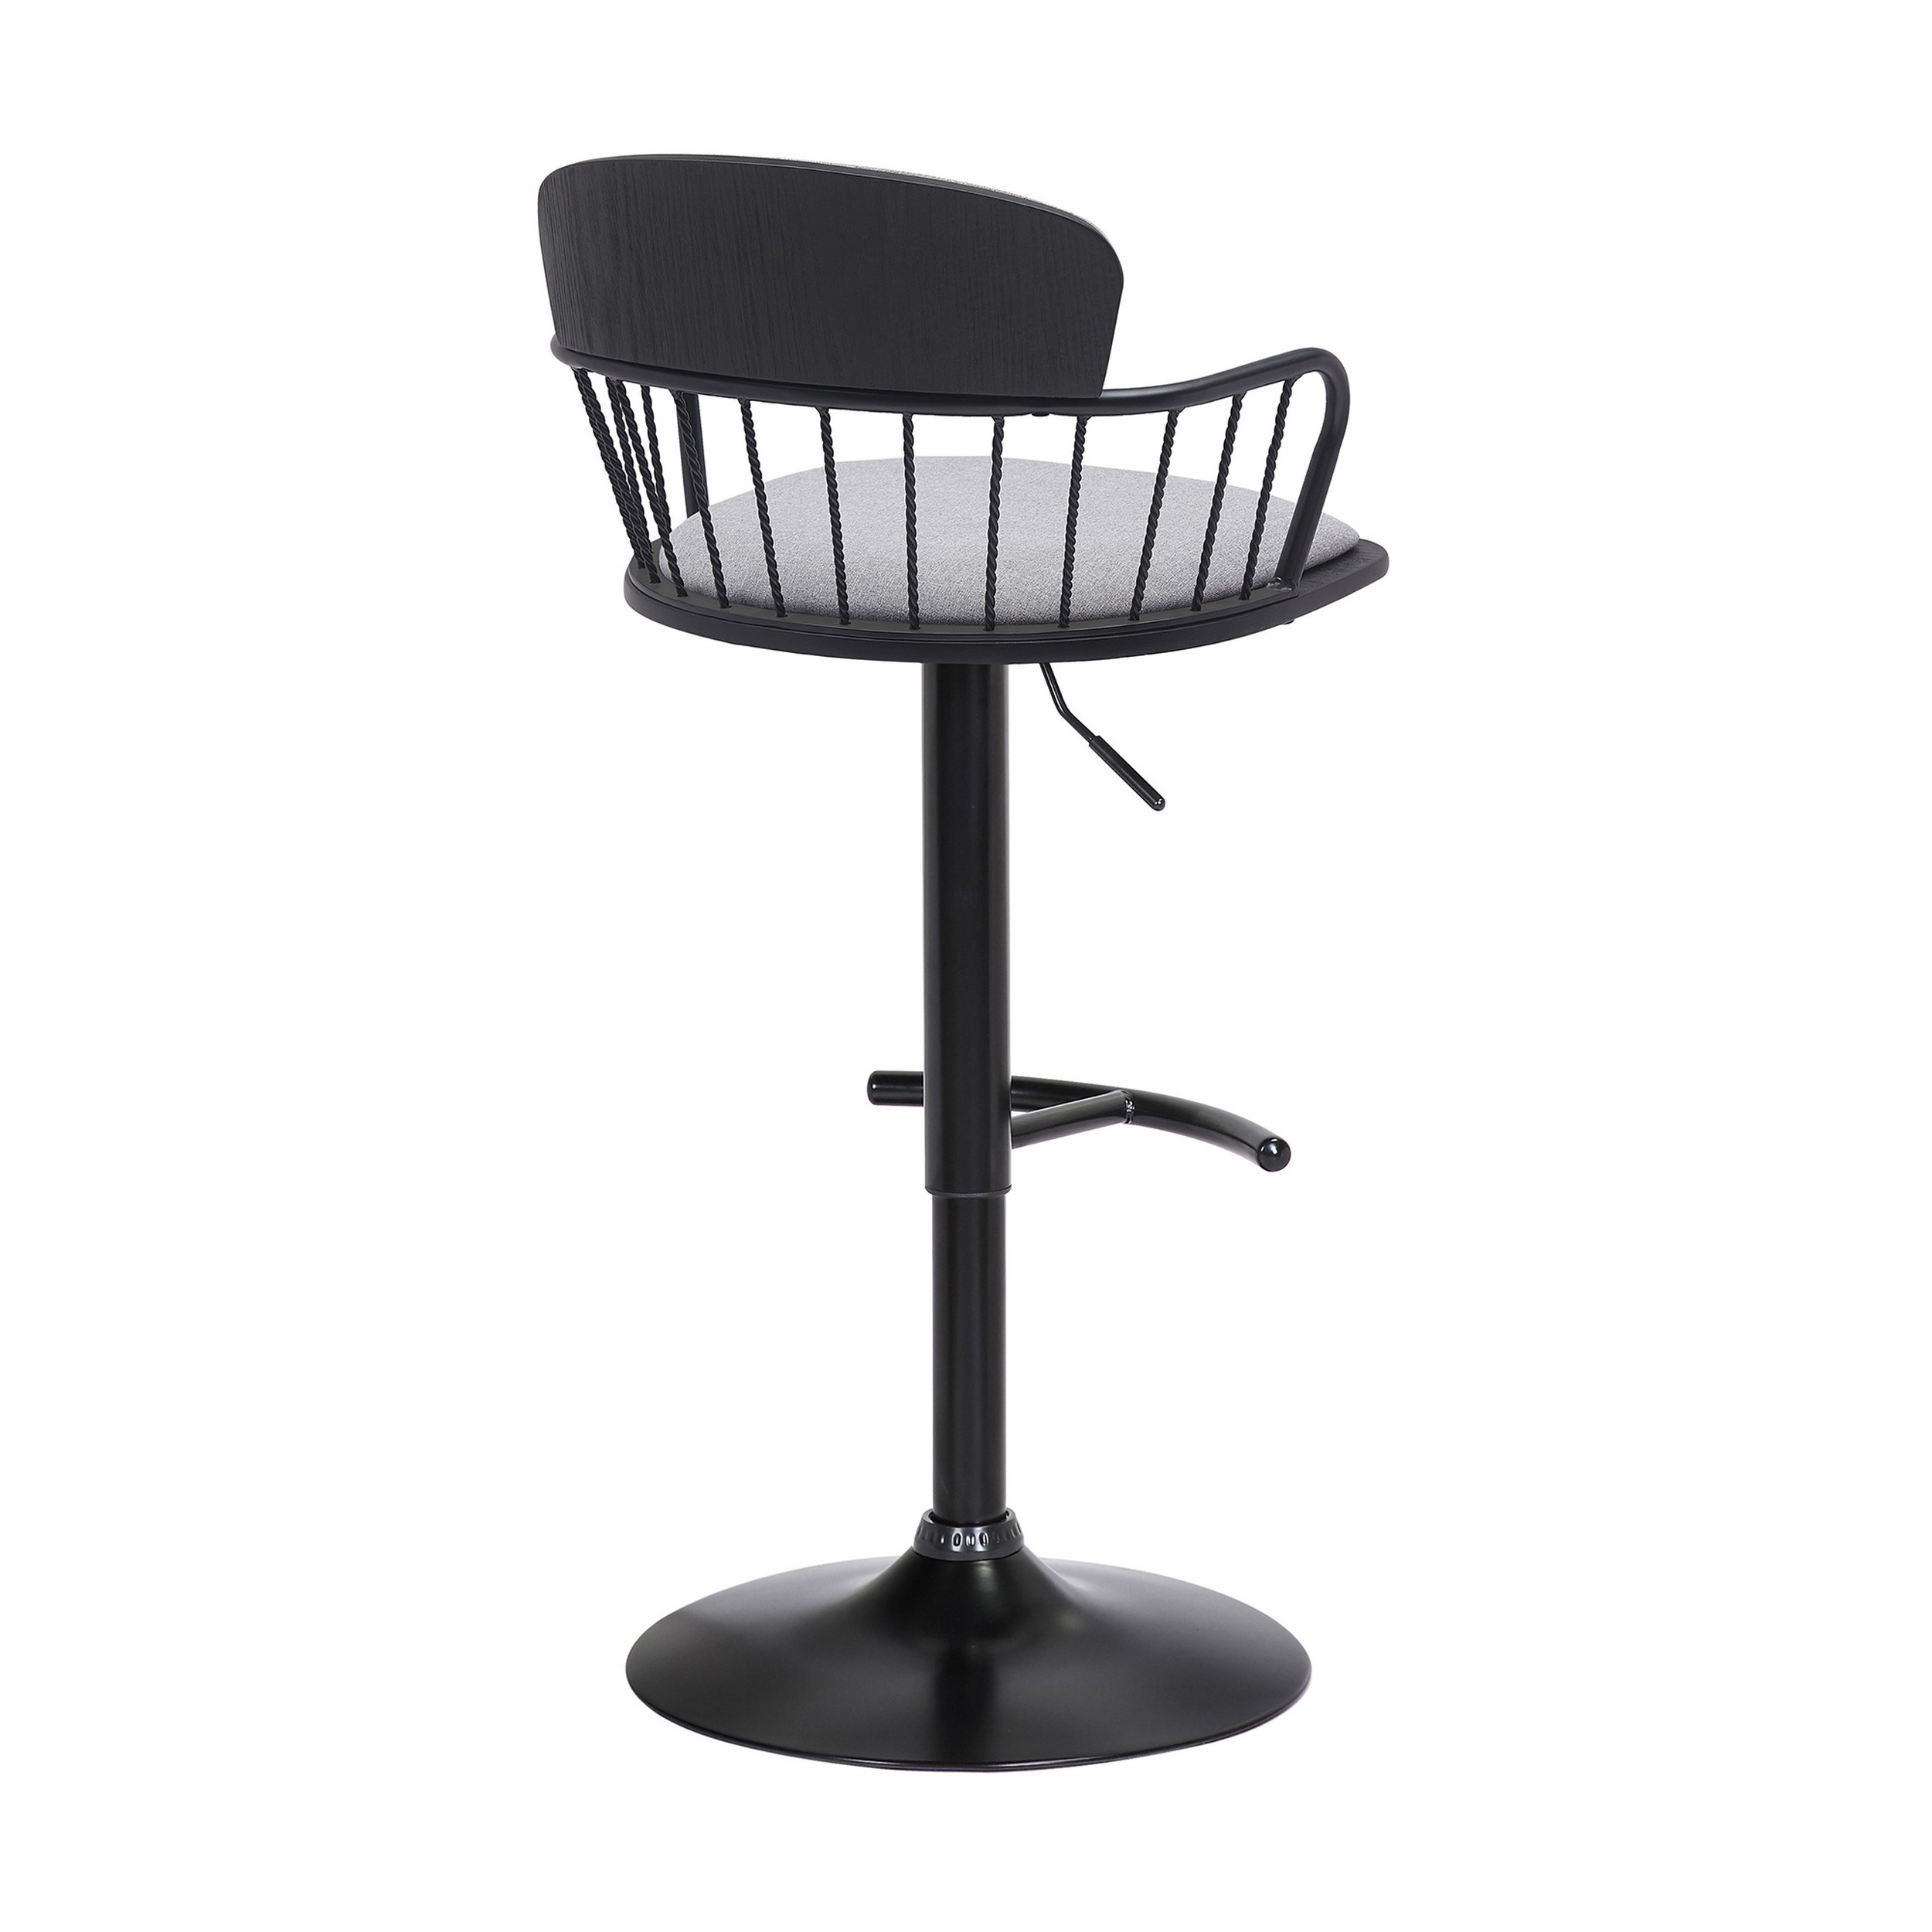 Nish 25-33 Inch Adjustable Barstool Chair, Light Gray Fabric, Black Frame - Saltoro Sherpi